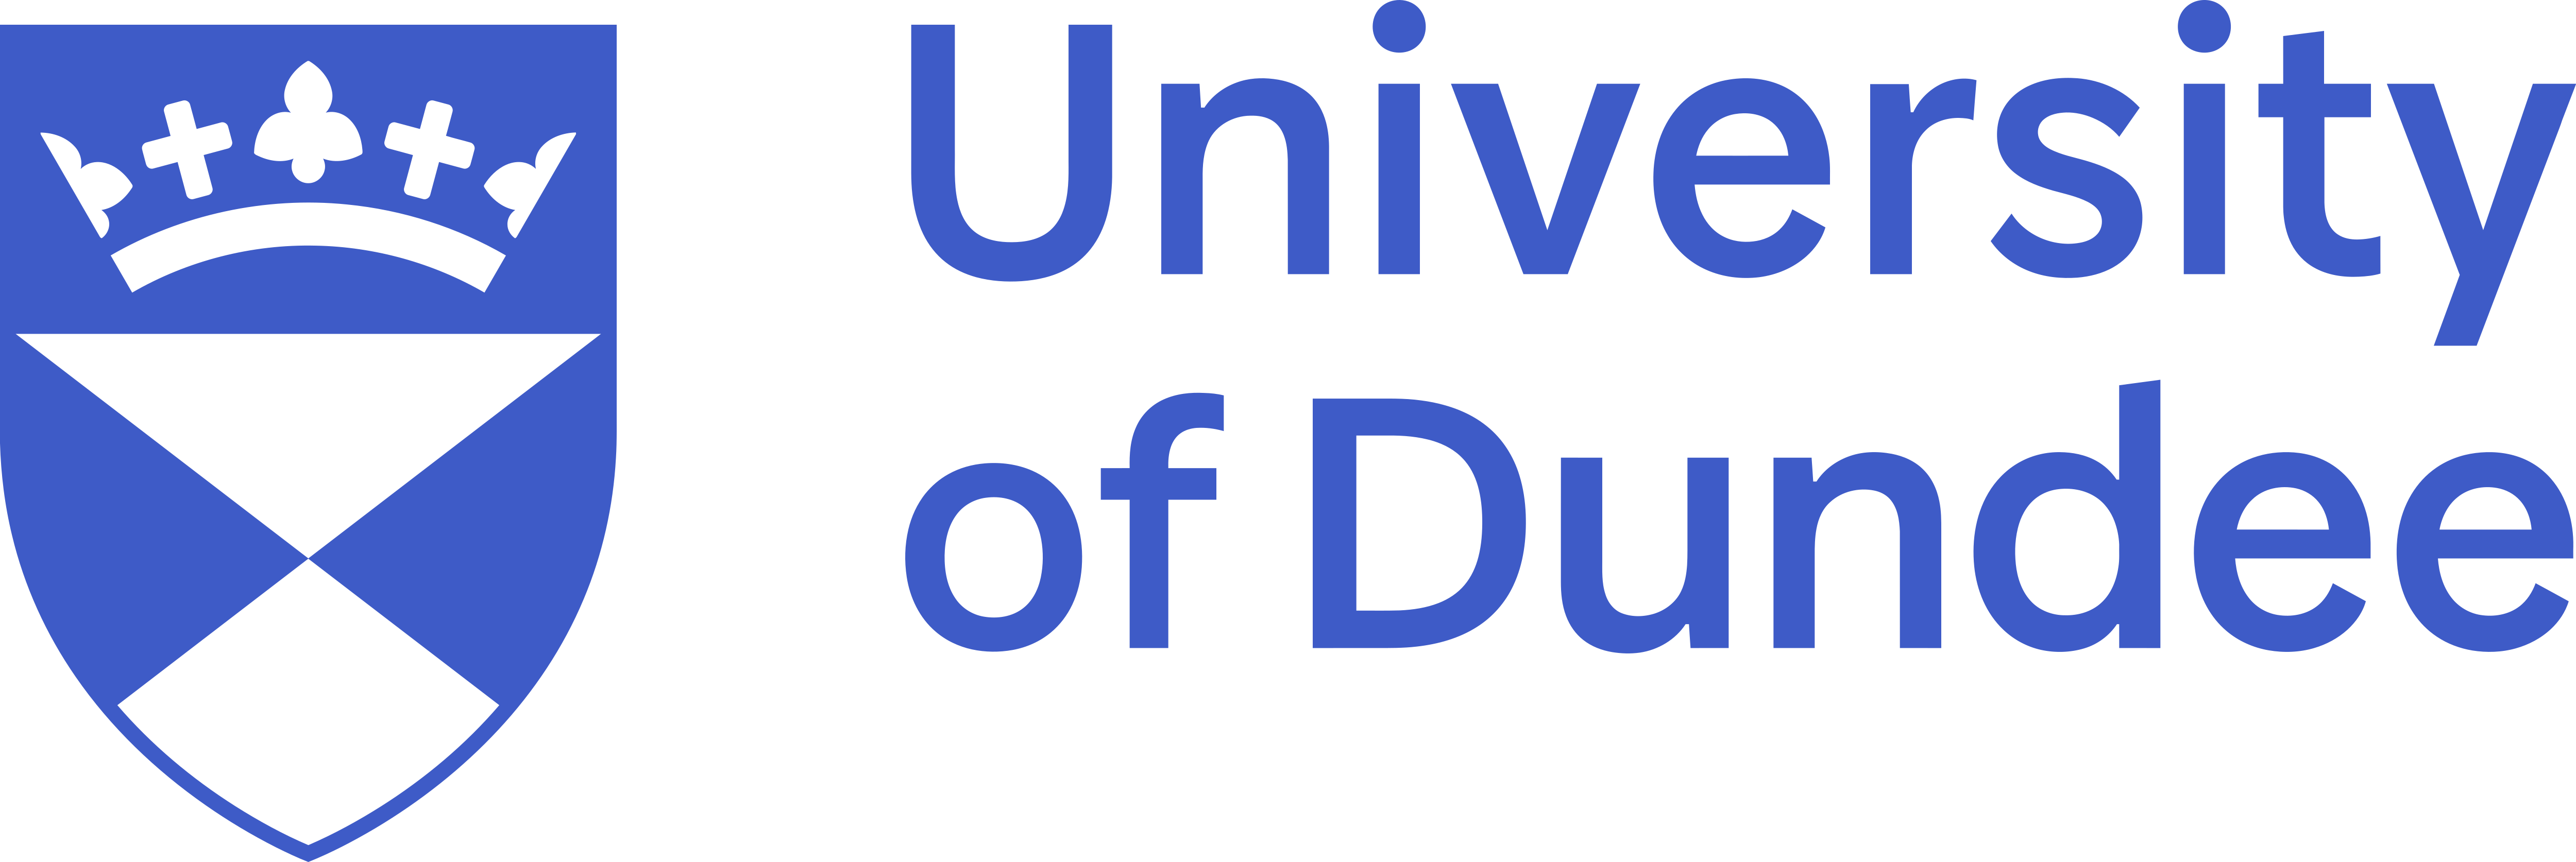 Logo for University of Dundee